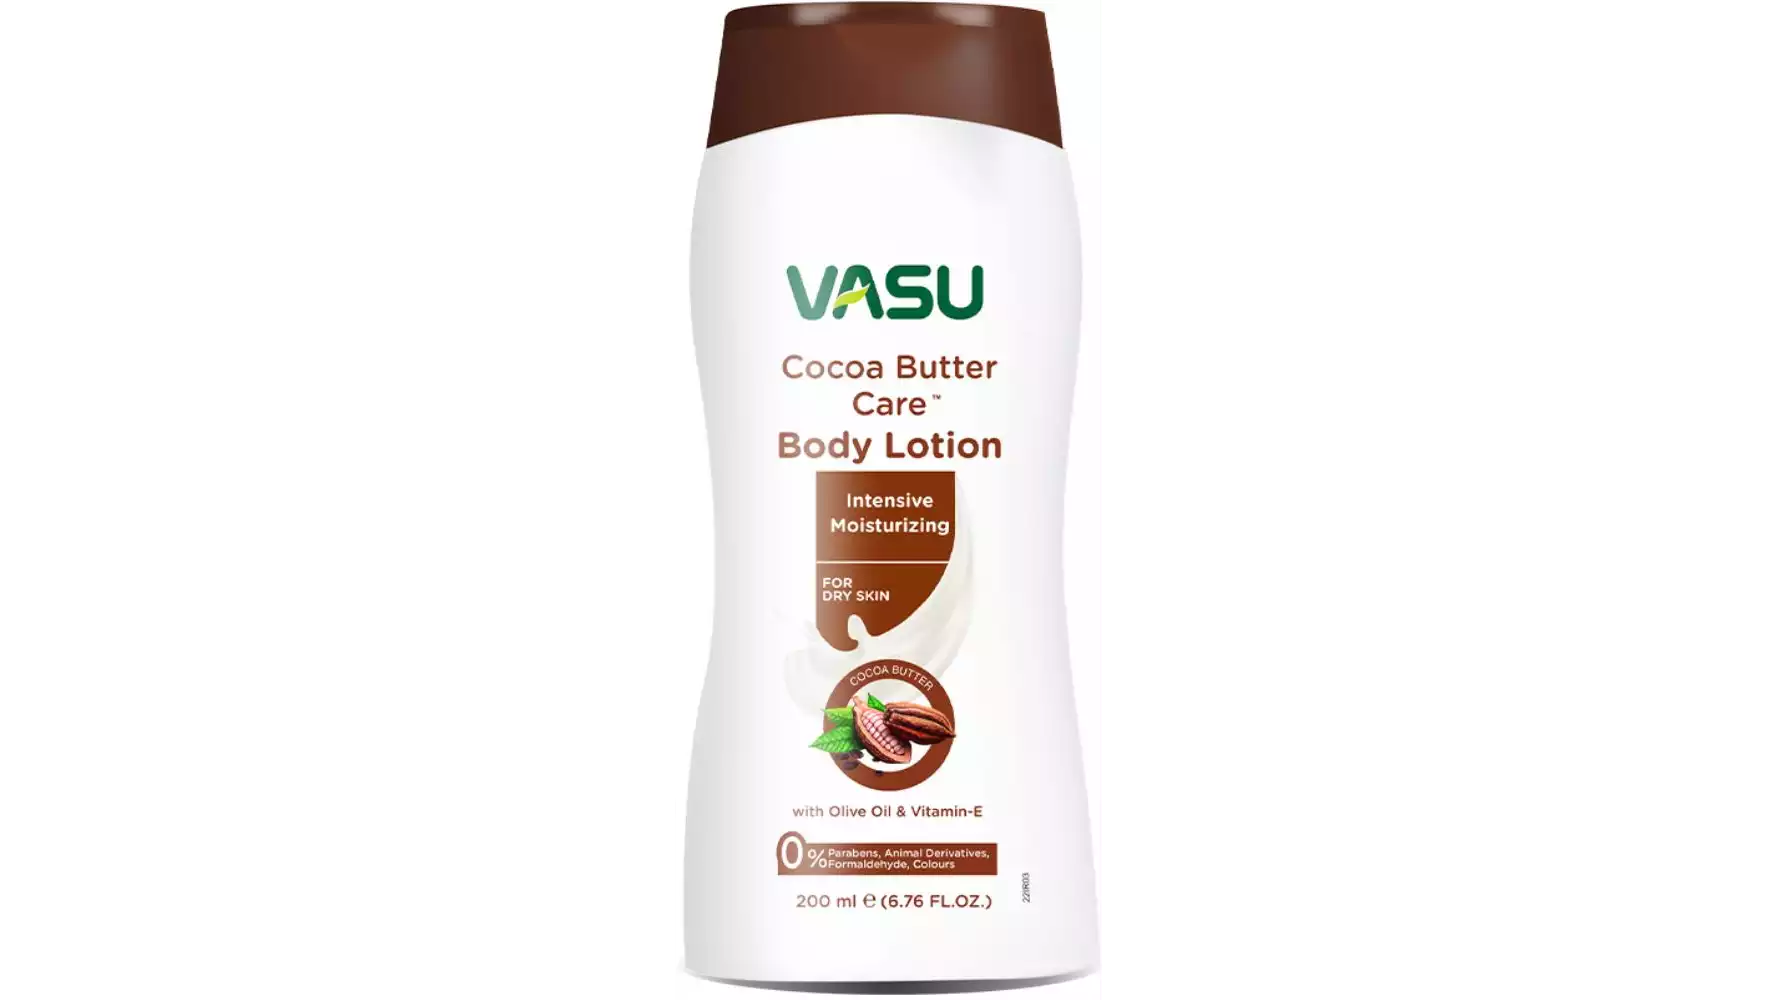 Vasu Cocoa Butter Care Intensive Moisturizing Body Lotion (200ml)